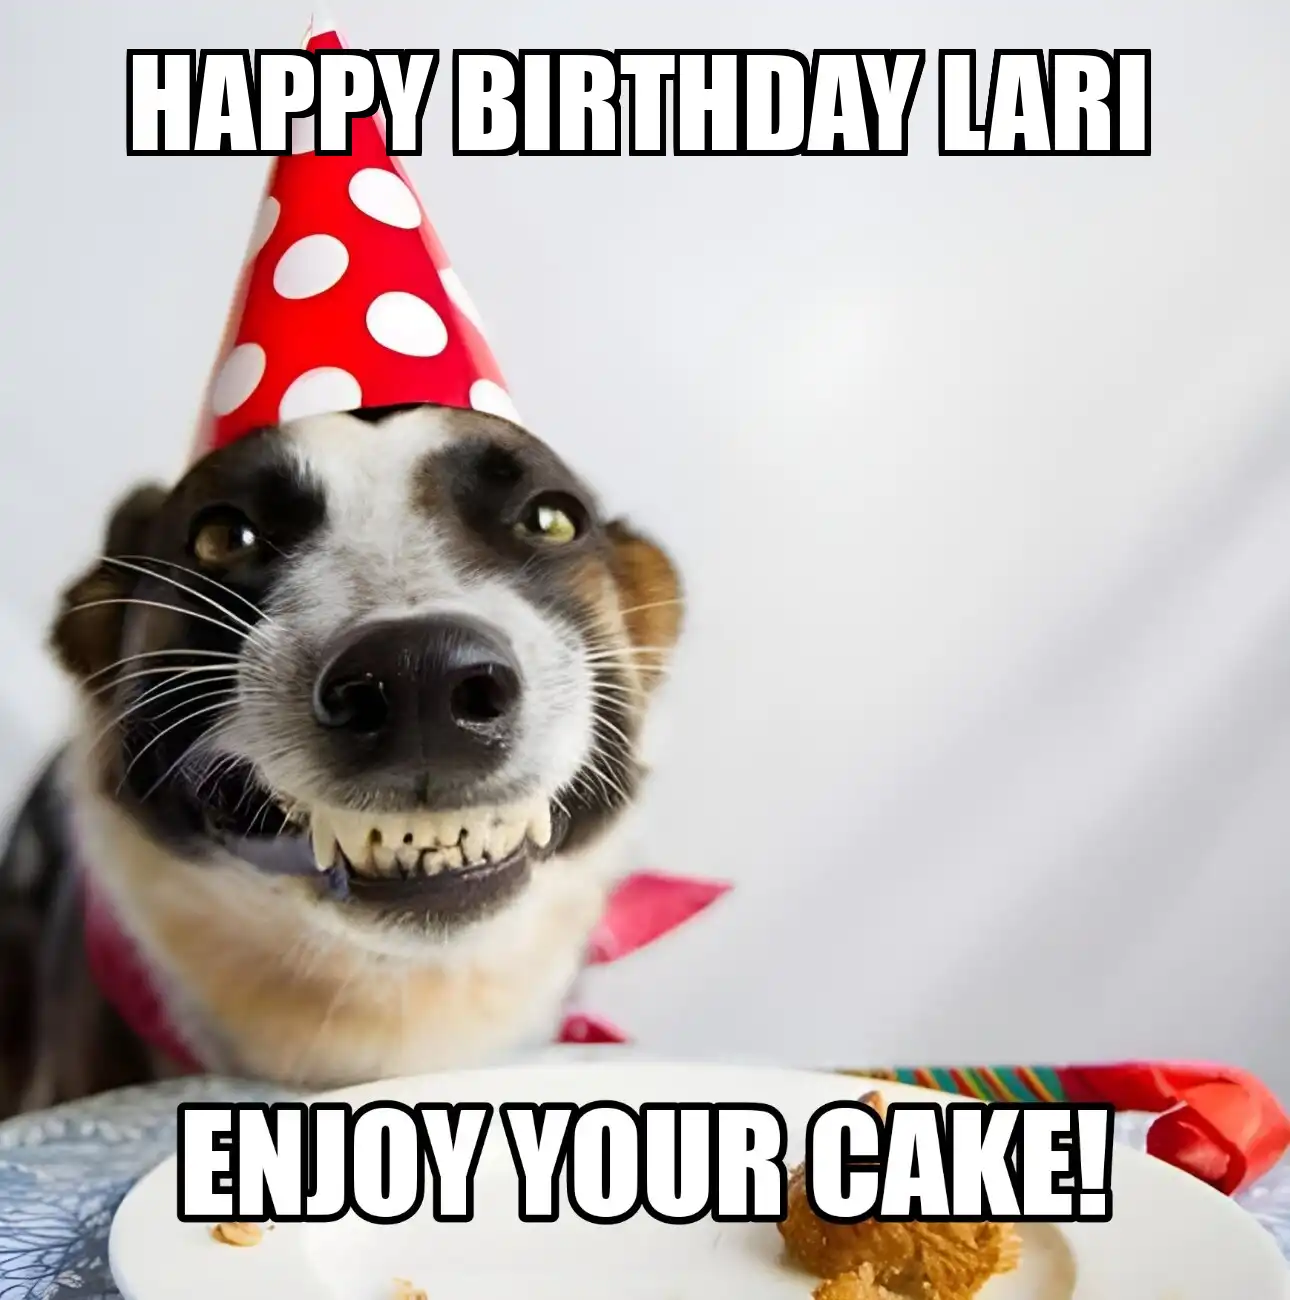 Happy Birthday Lari Enjoy Your Cake Dog Meme